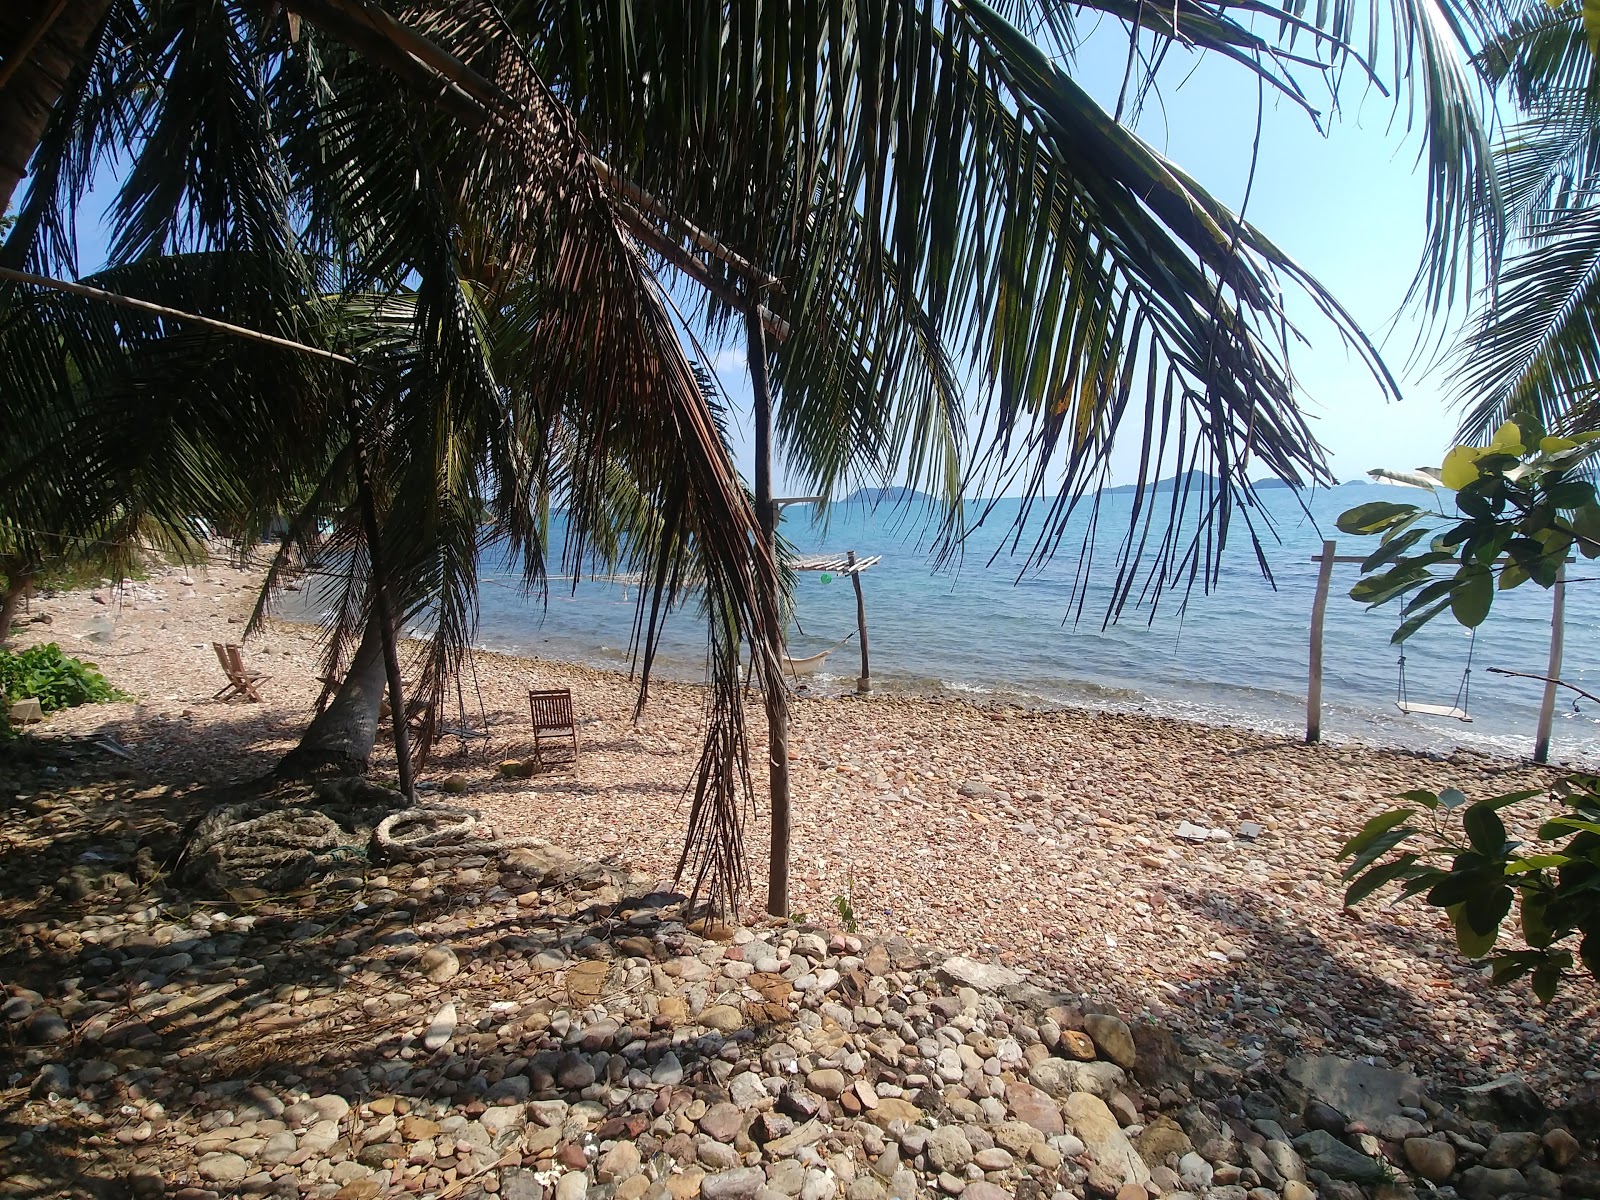 Foto di Soi Beach ubicato in zona naturale